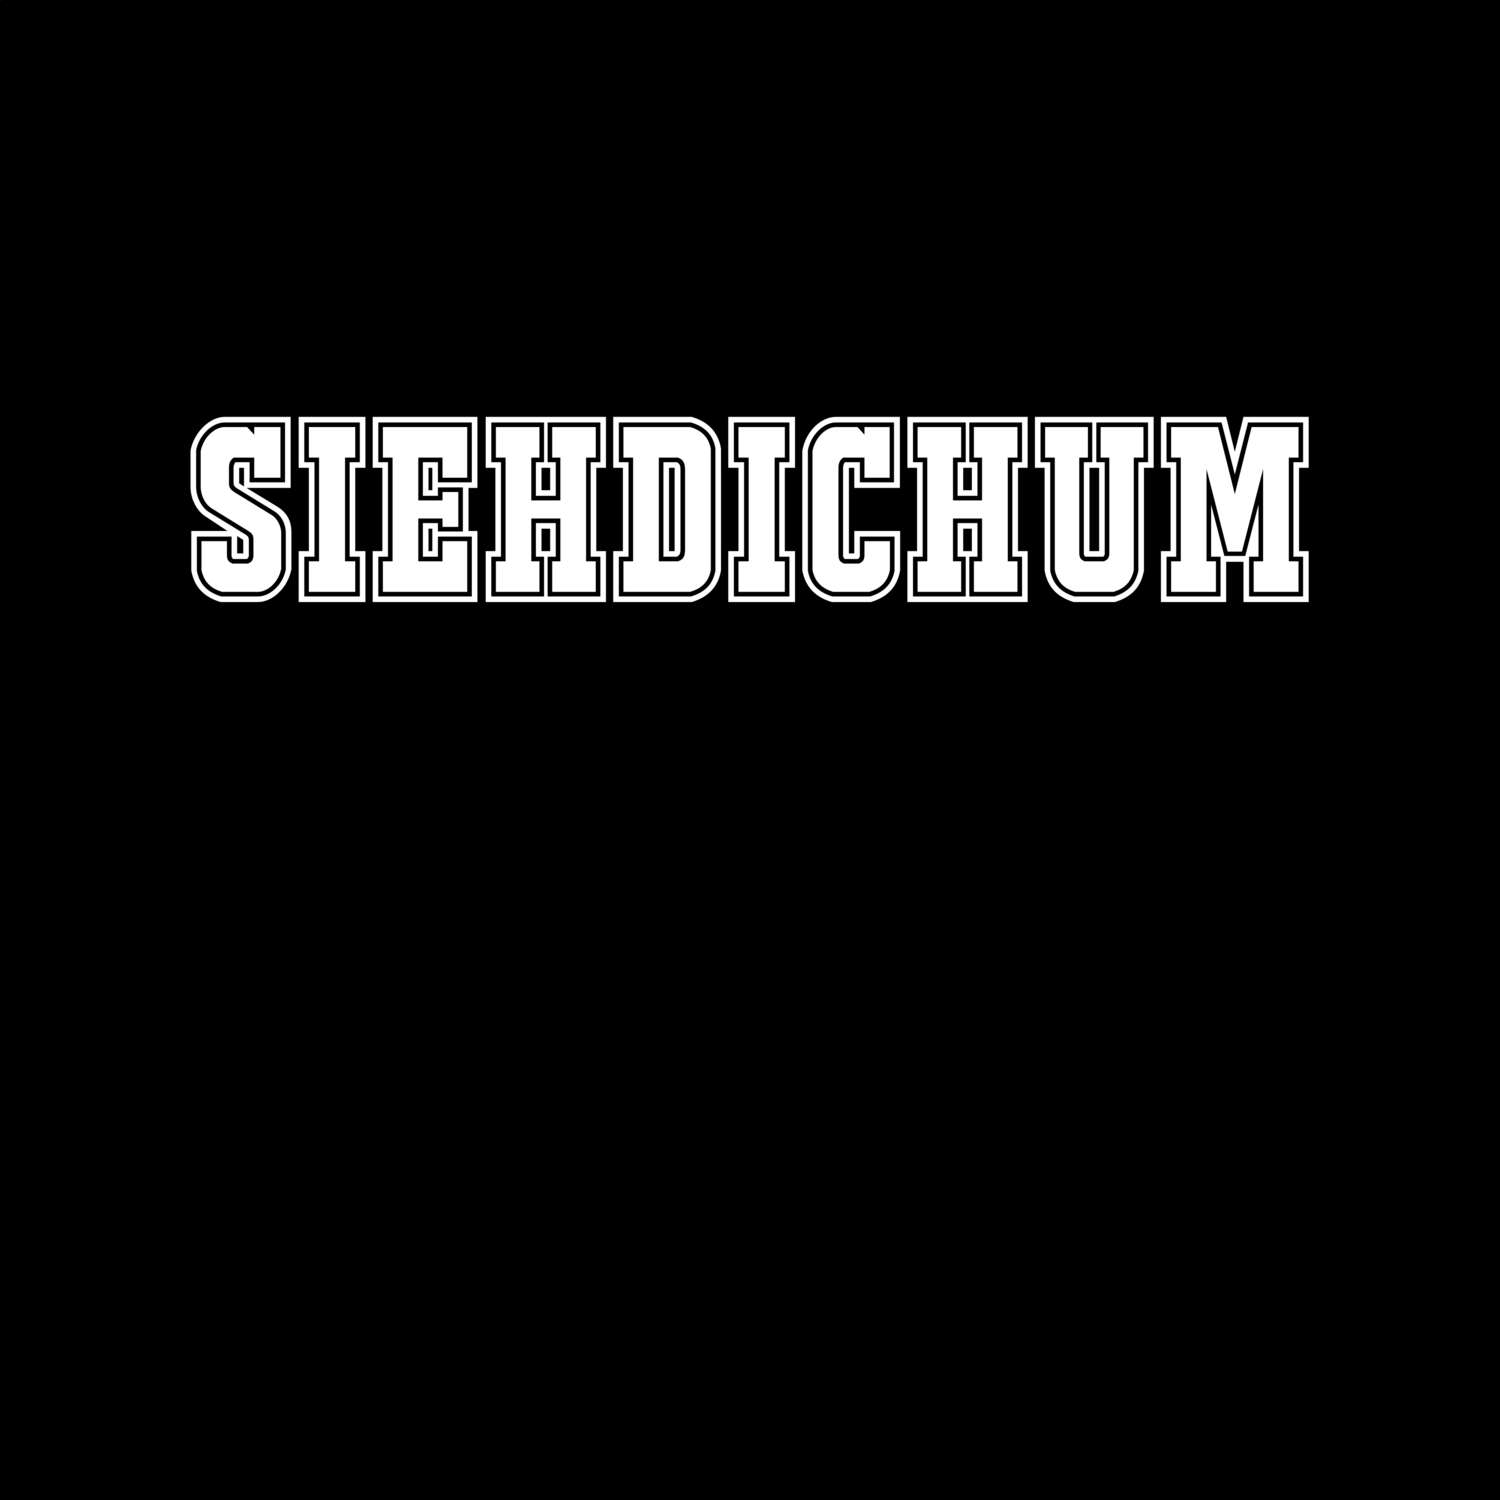 Siehdichum T-Shirt »Classic«